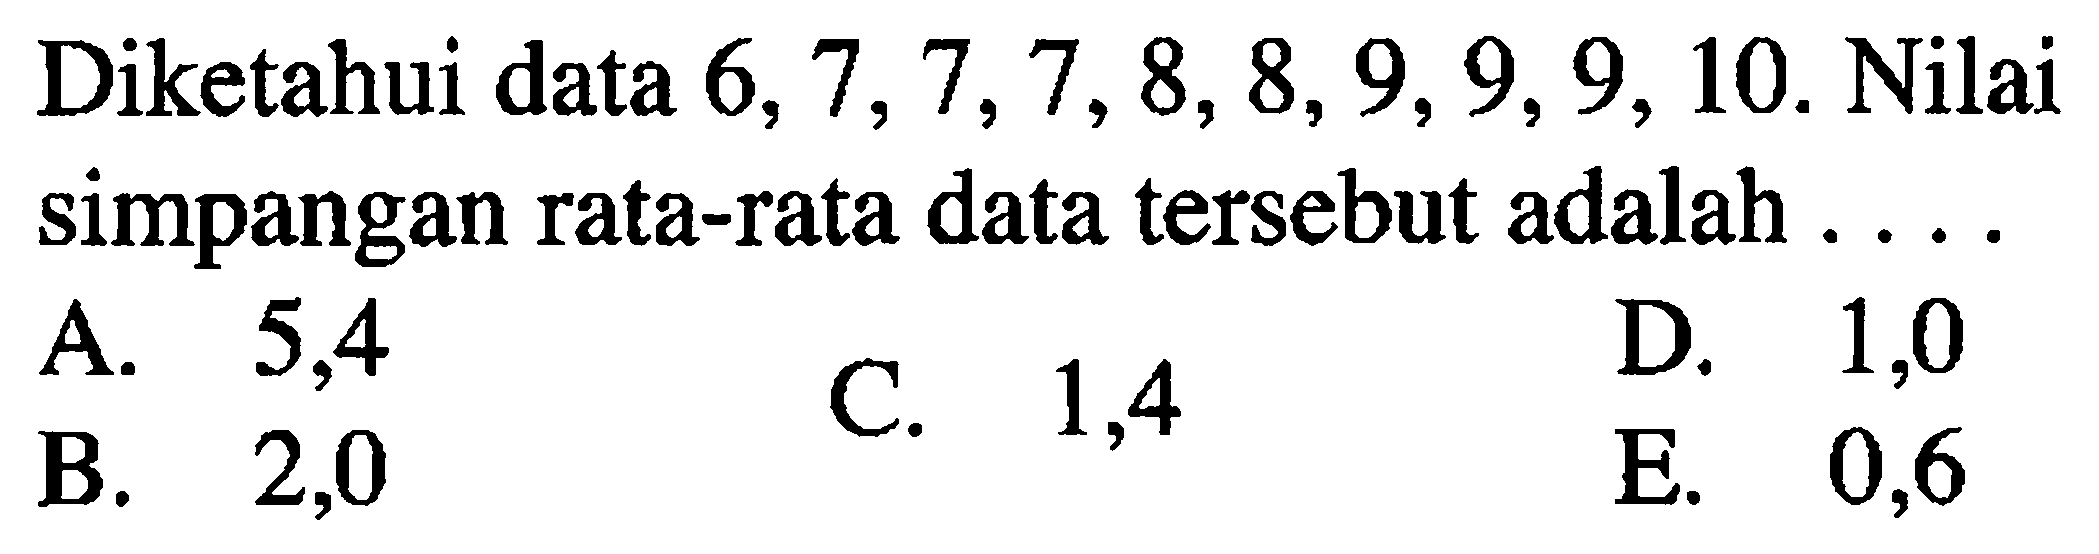 Diketahui data 6, 7, 7, 7, 8, 8, 9, 9, 9, 10. Nilai simpangan rata-rata data tersebut adalah ...